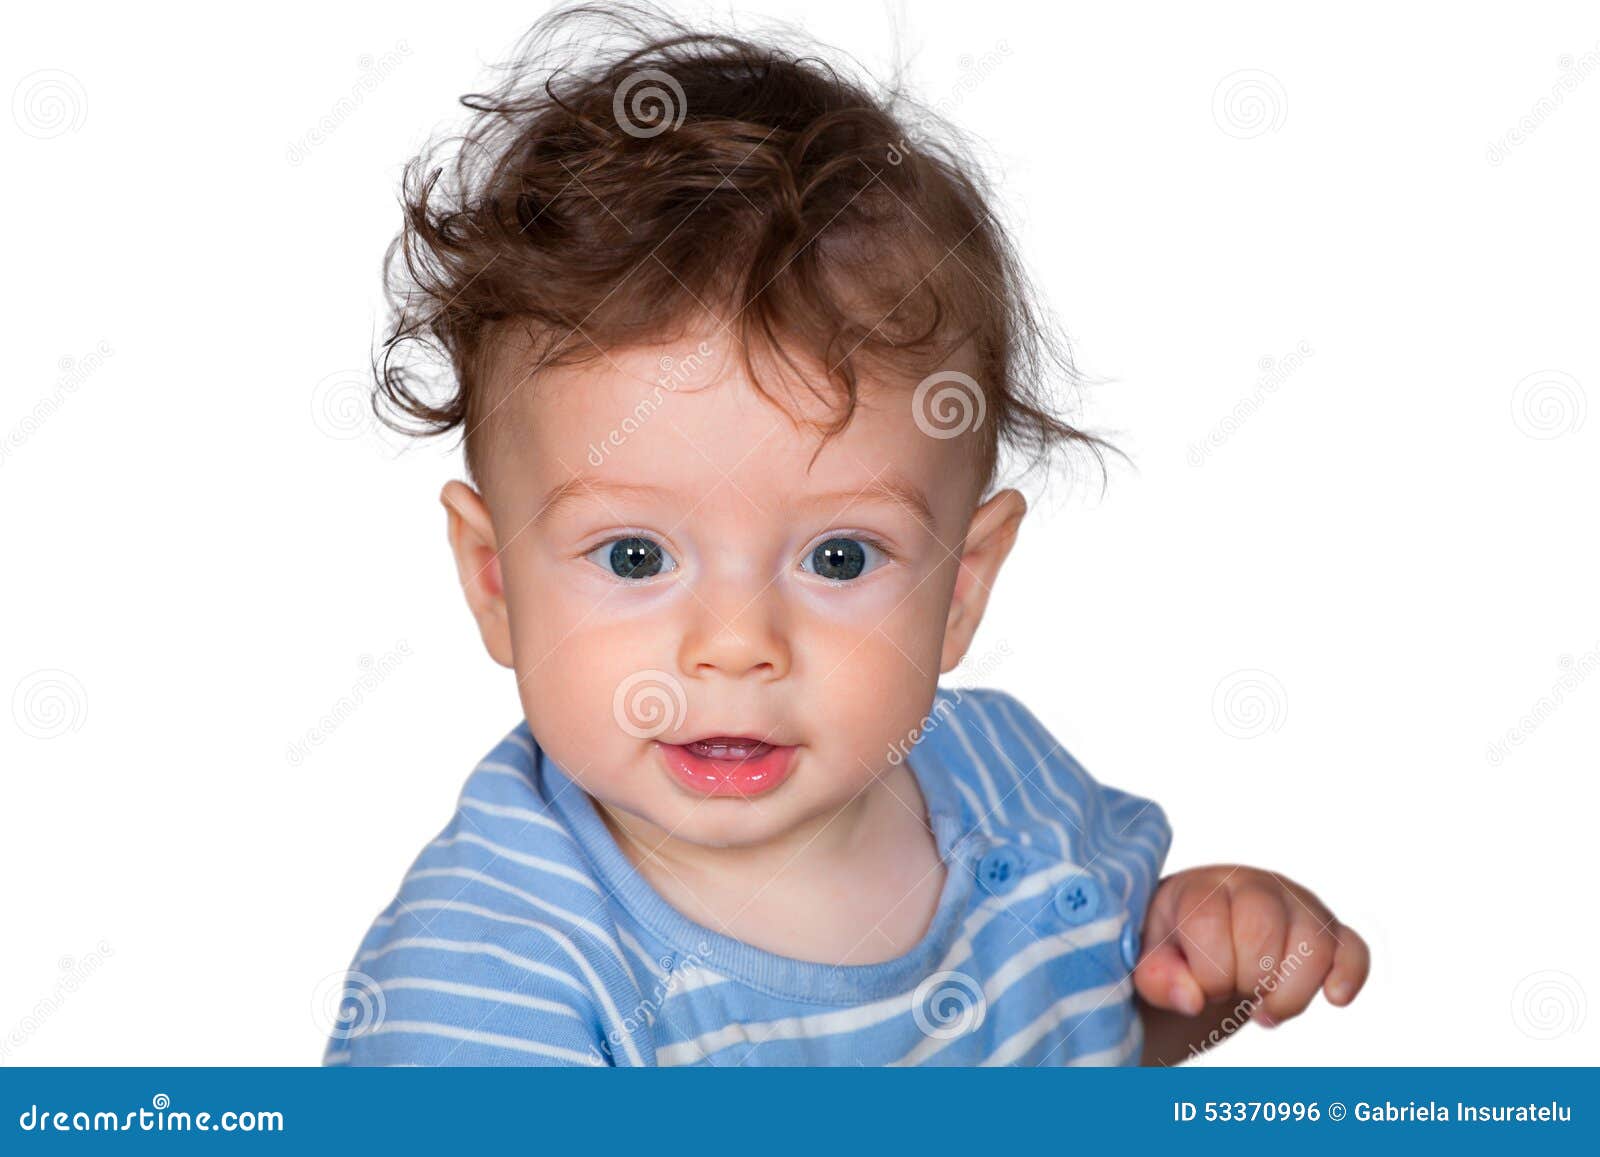 Baby boy studio portrait stock photo. Image of innocence - 53370996